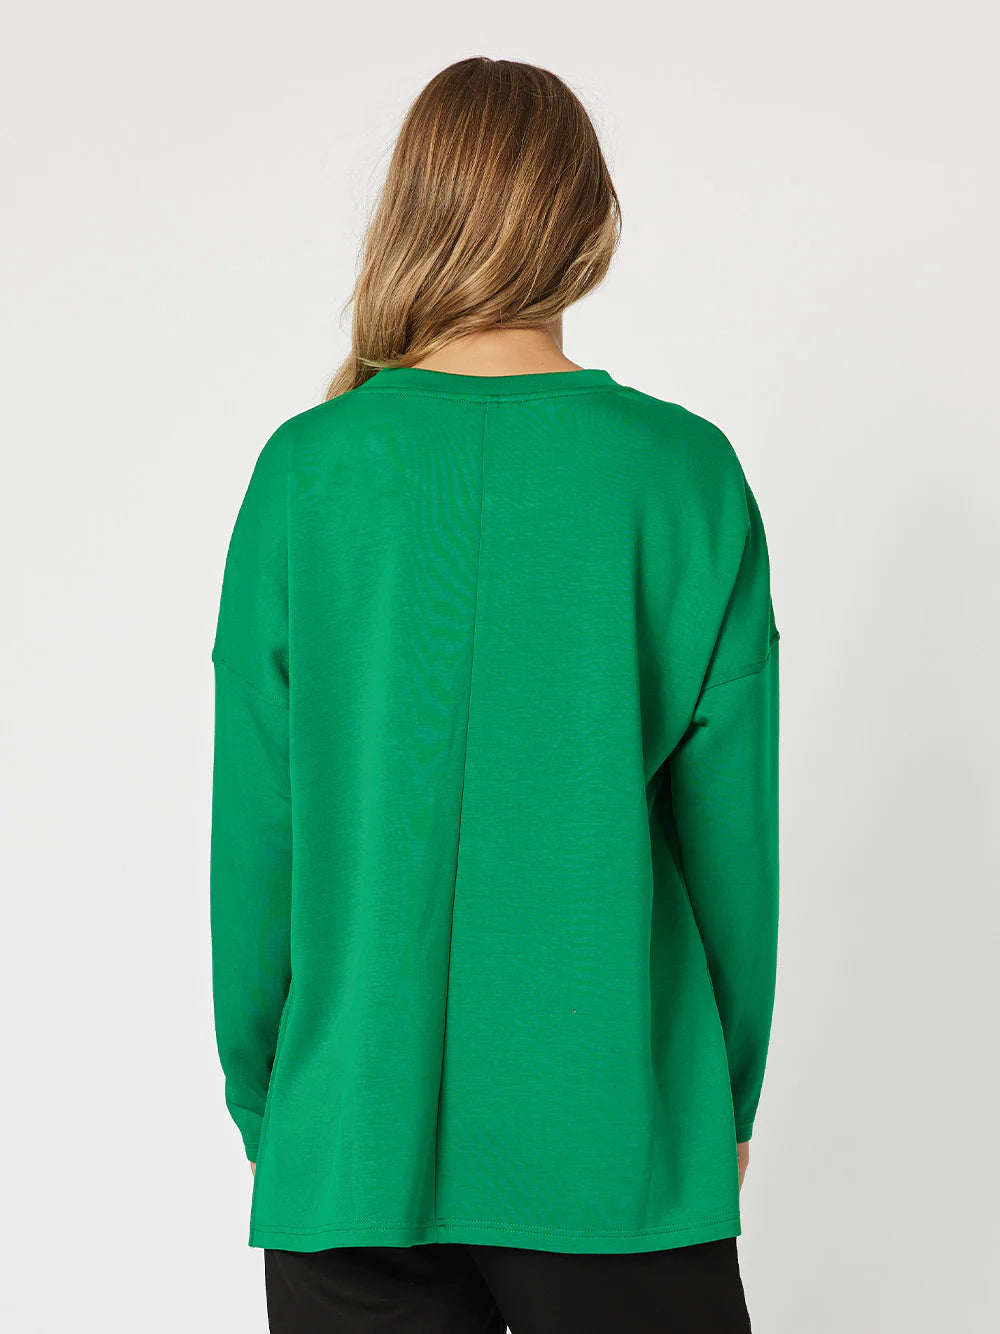 Urban Sweatshirt - Ivy